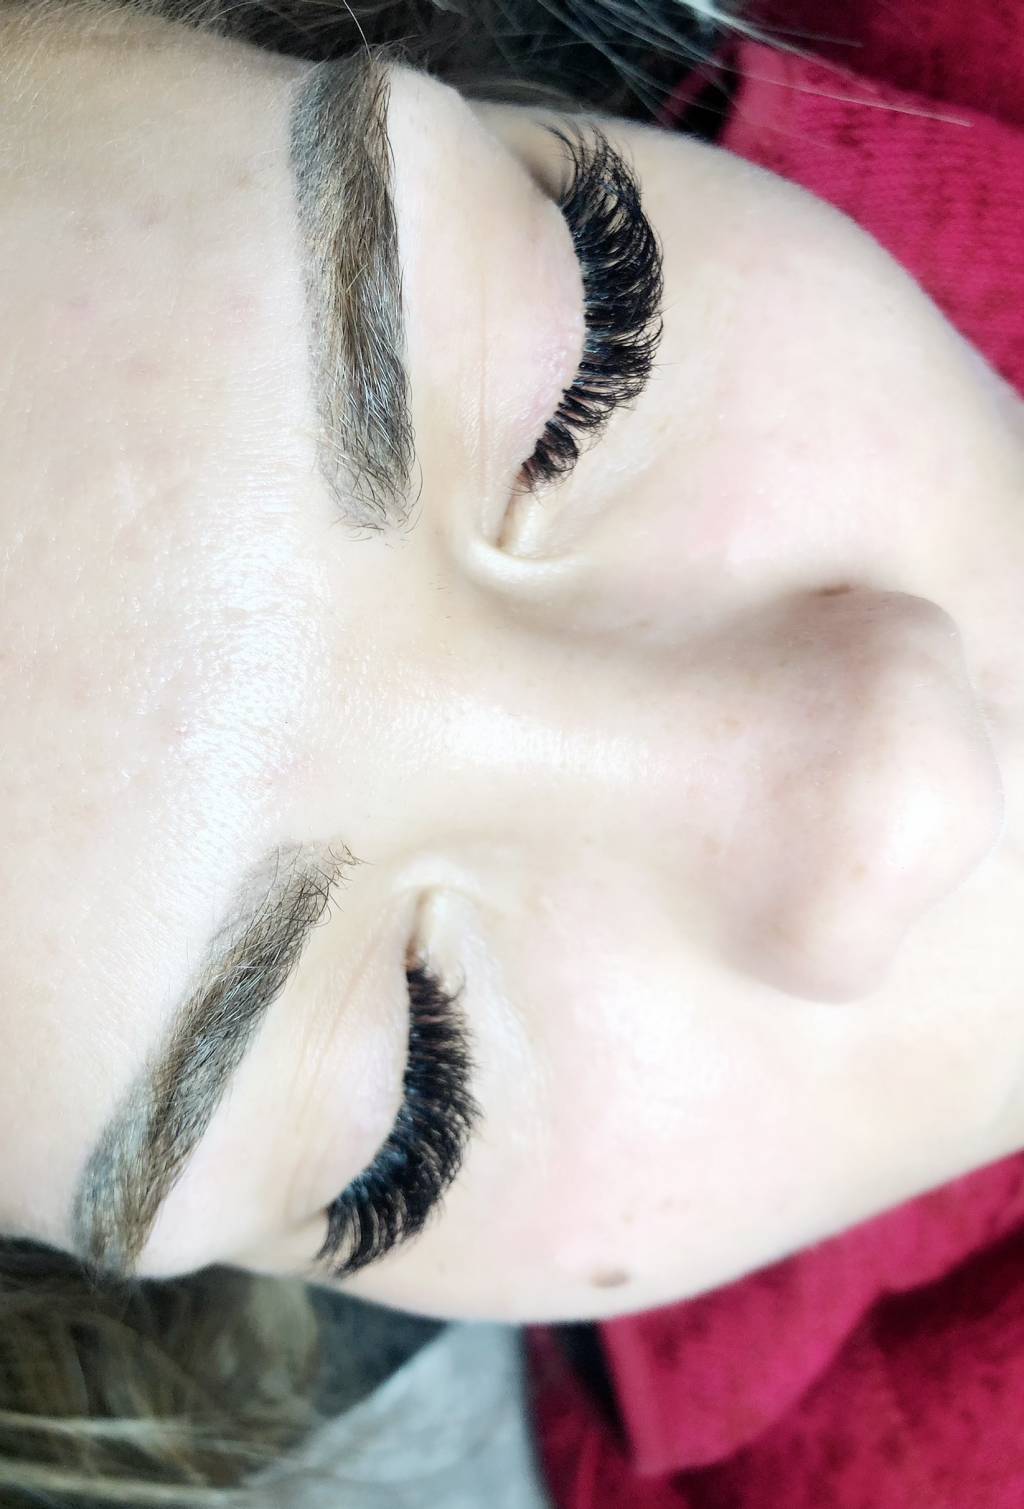 Eyelashes extensions